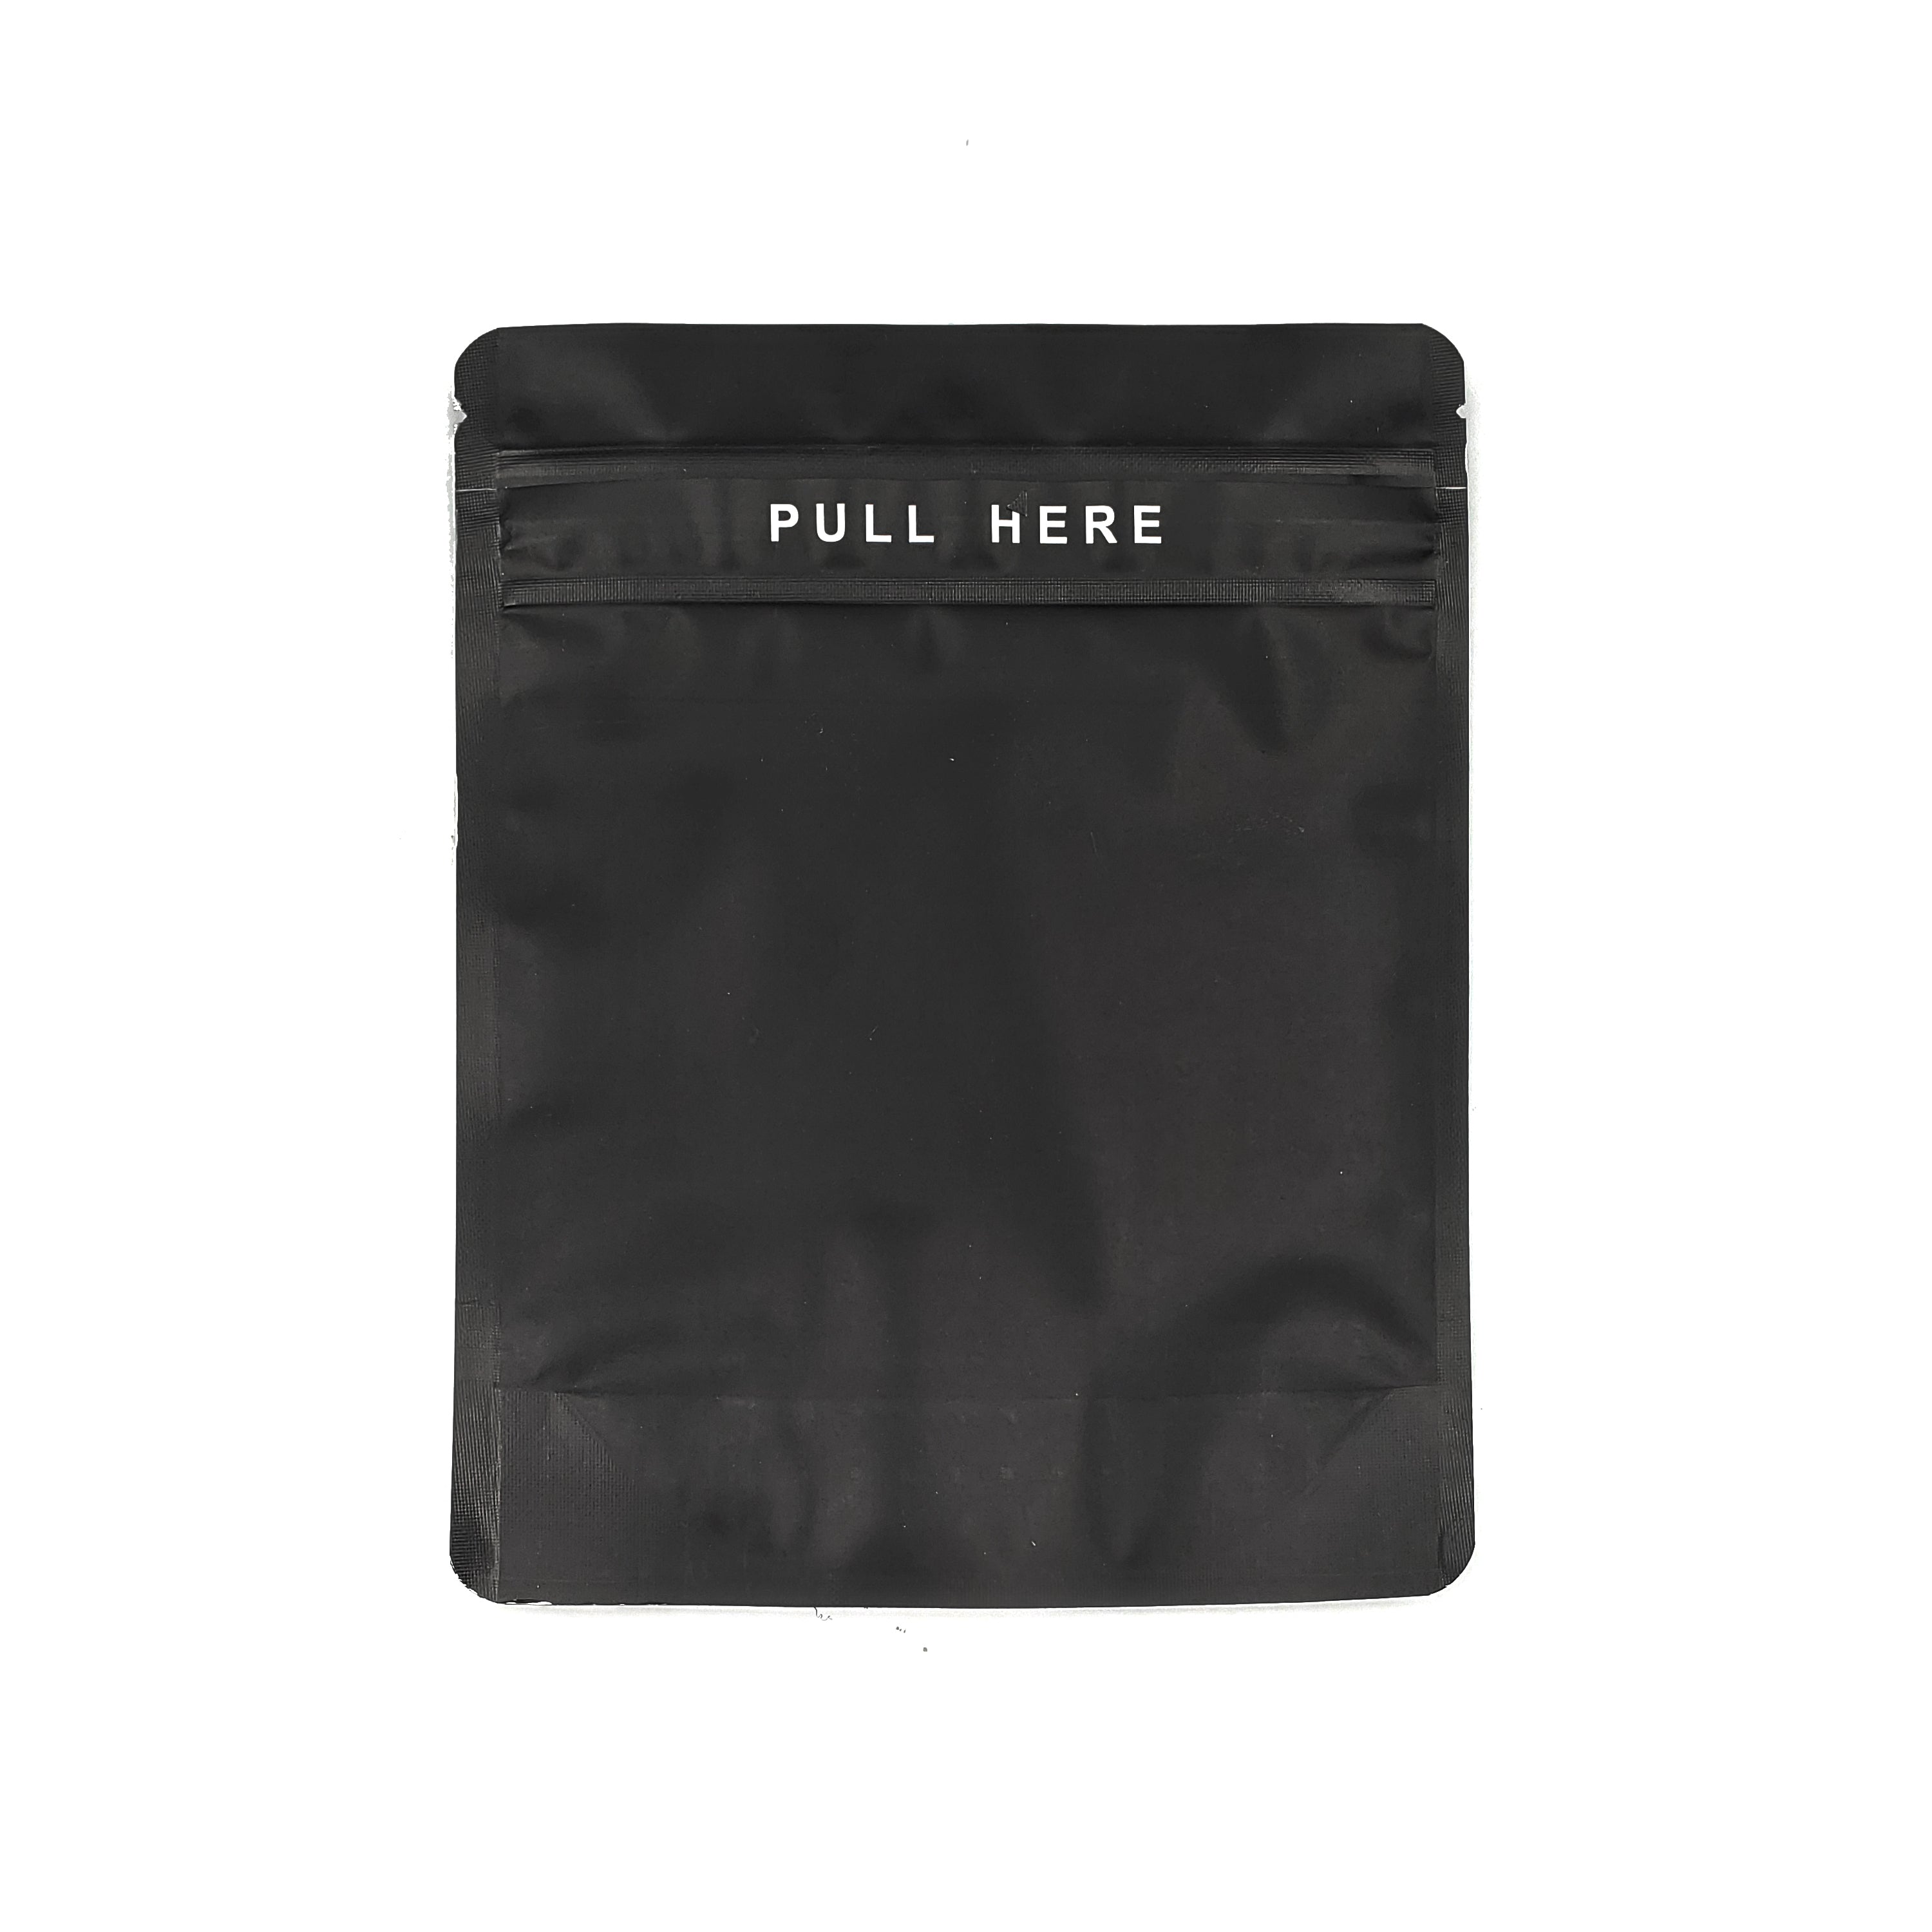 Bag King Child Resistant Opaque Exit Bag (6x8) Black